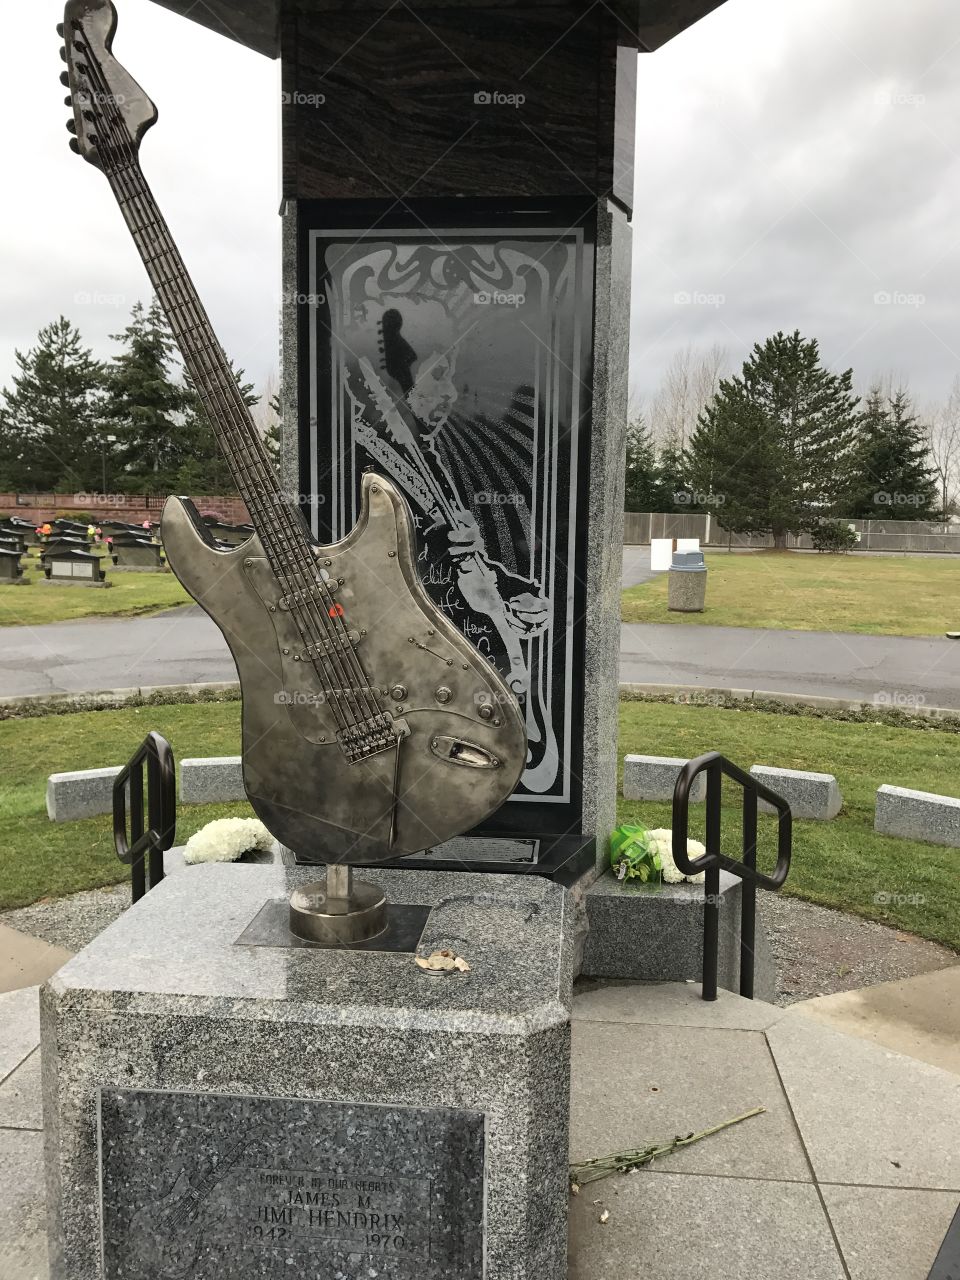 Jimi Hendrix monument.
